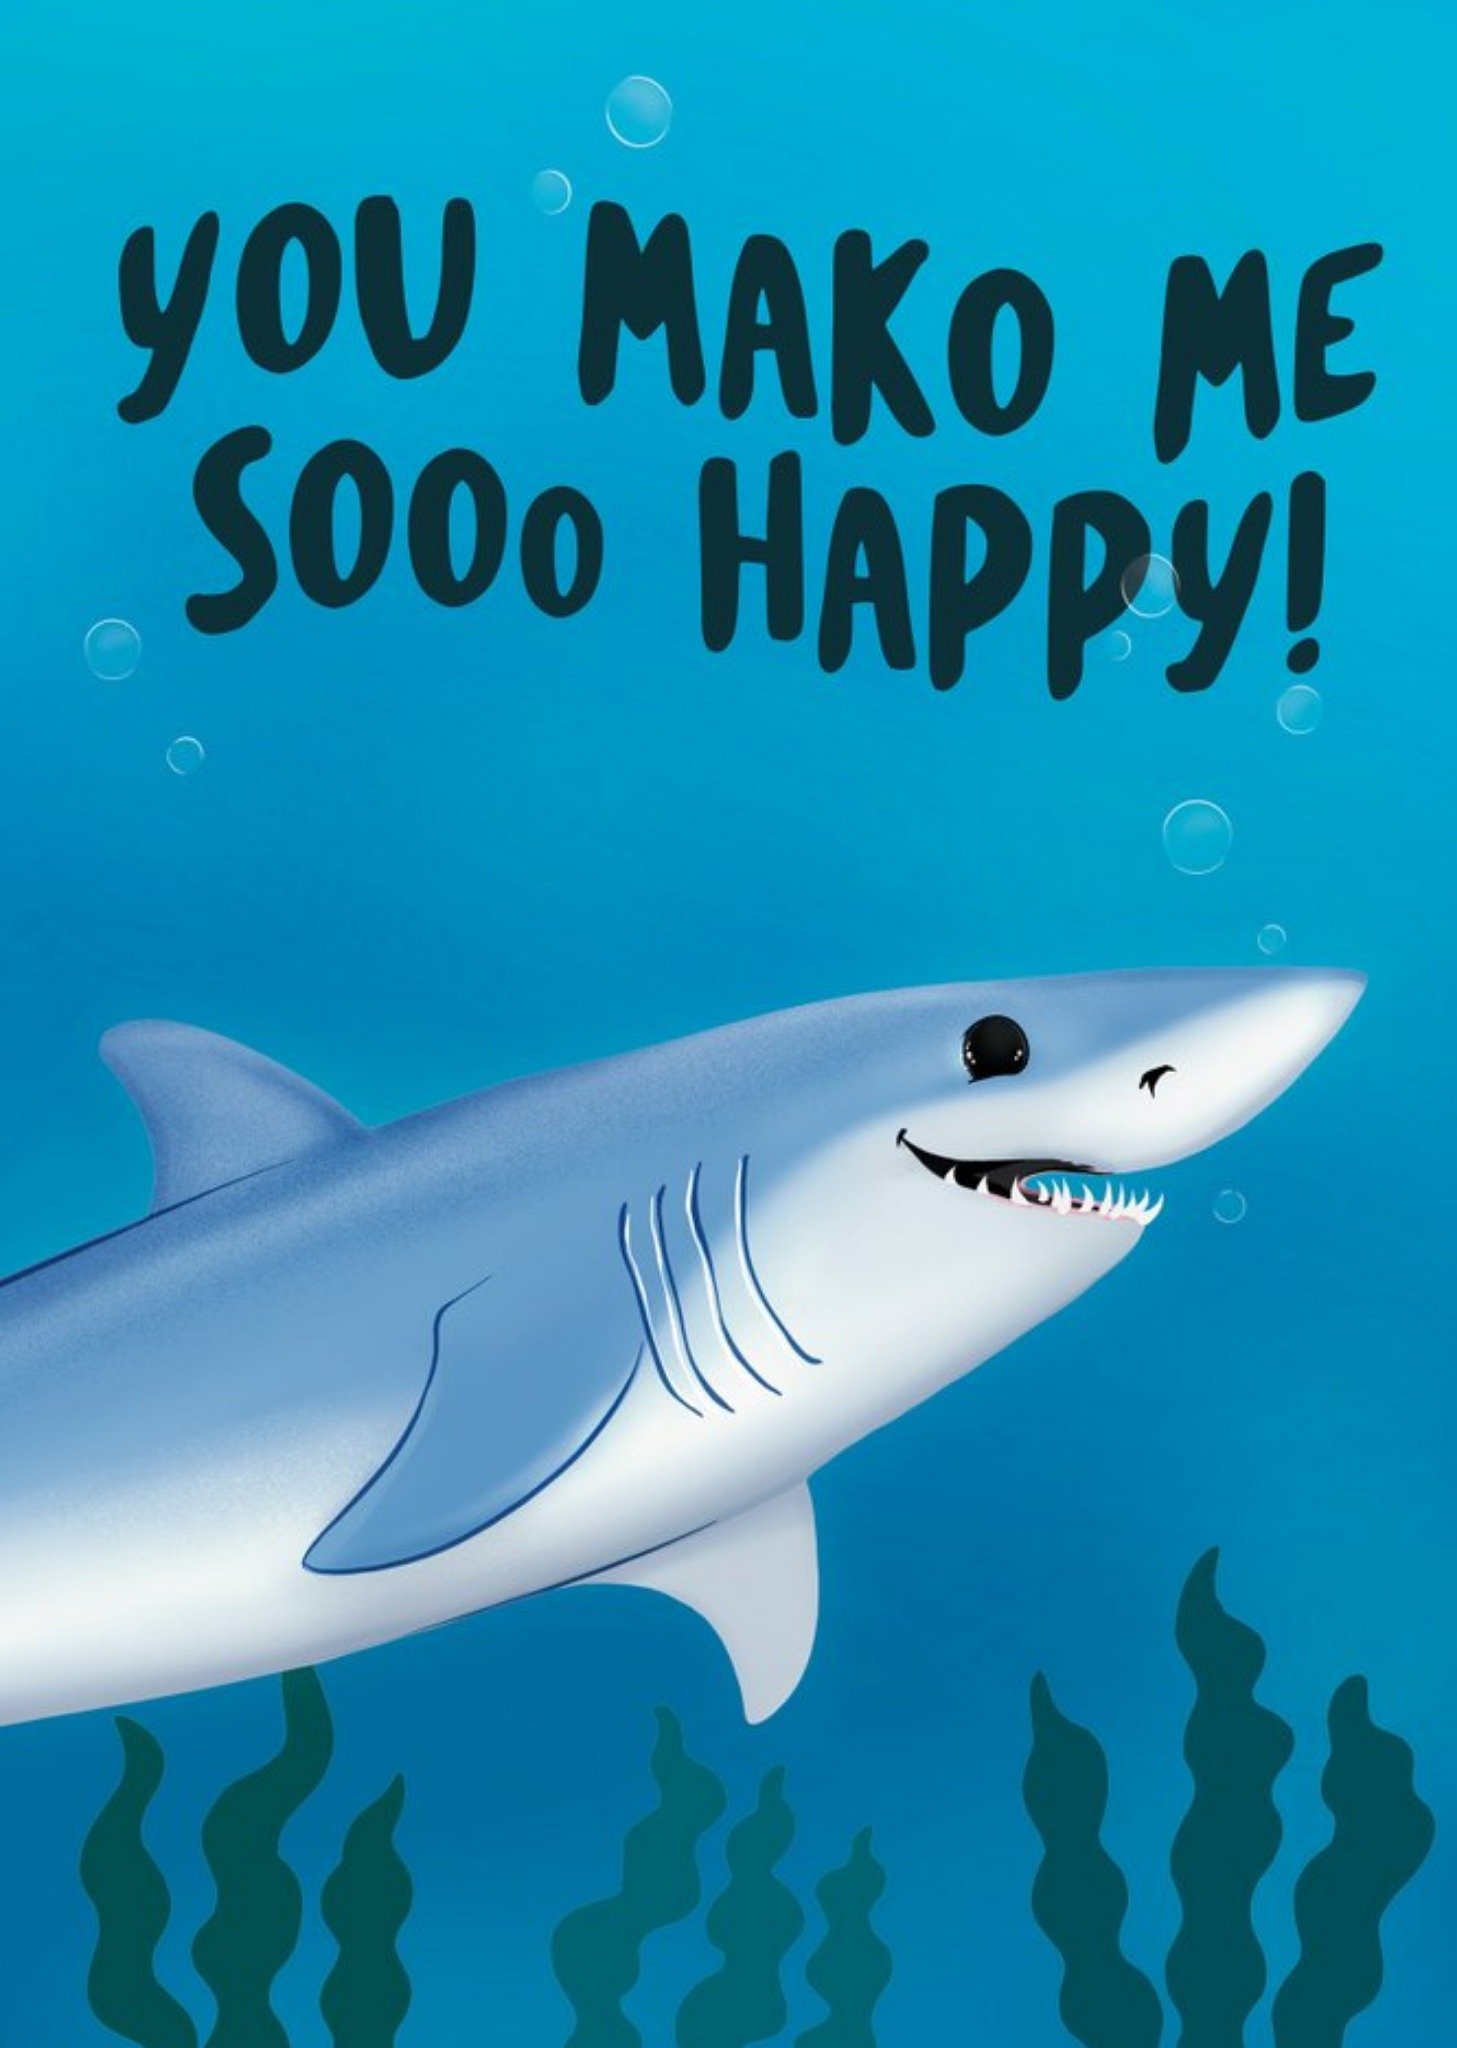 Moonpig Illustration Of A Mako Shark You Mako Me Sooo Happy Card, Large